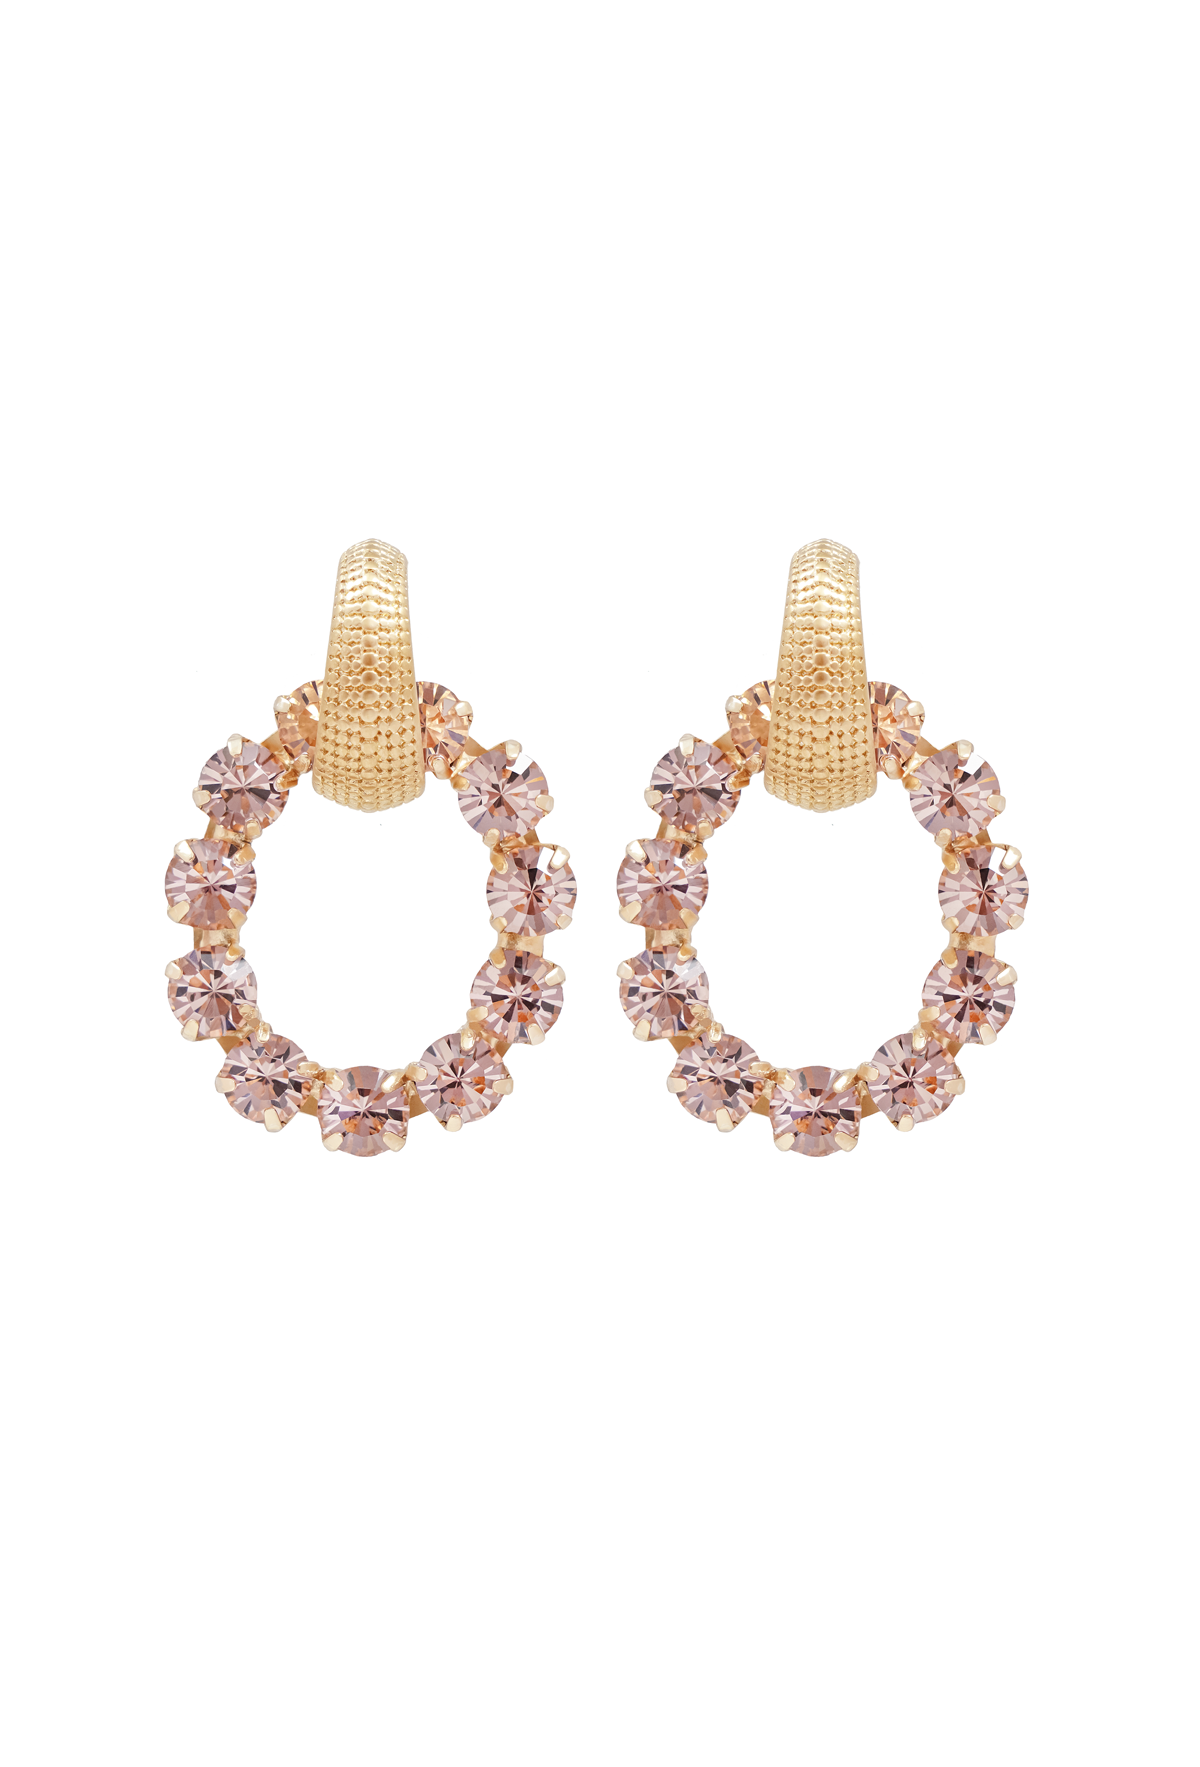 Carolina Swarovski earrings - Vintage pink